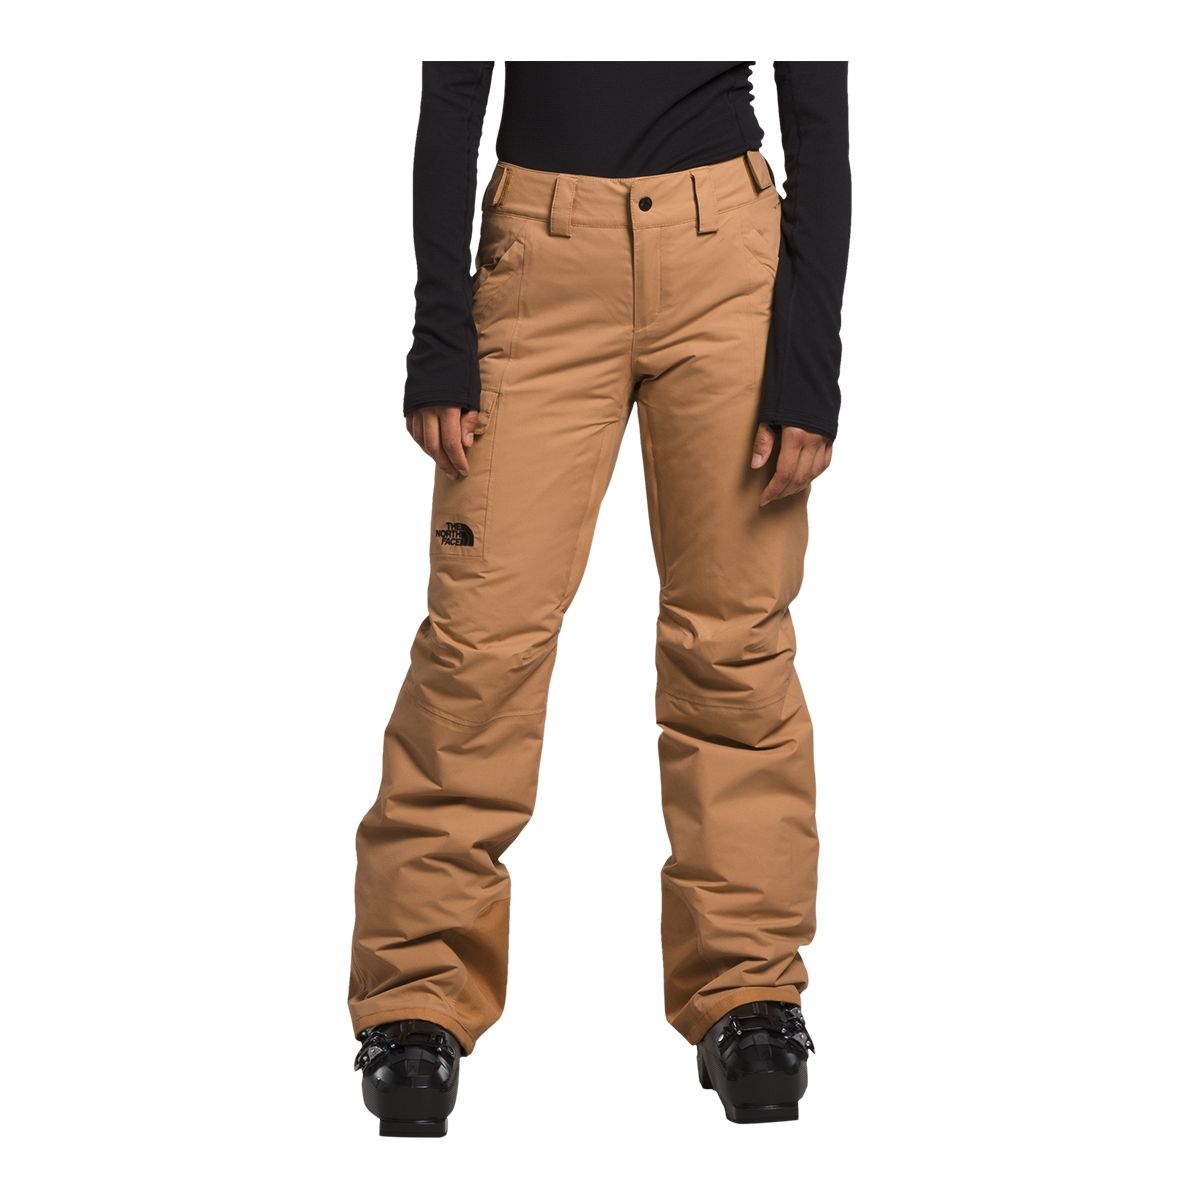 Warrior Ladies Cargo Trousers - Workwear Giant